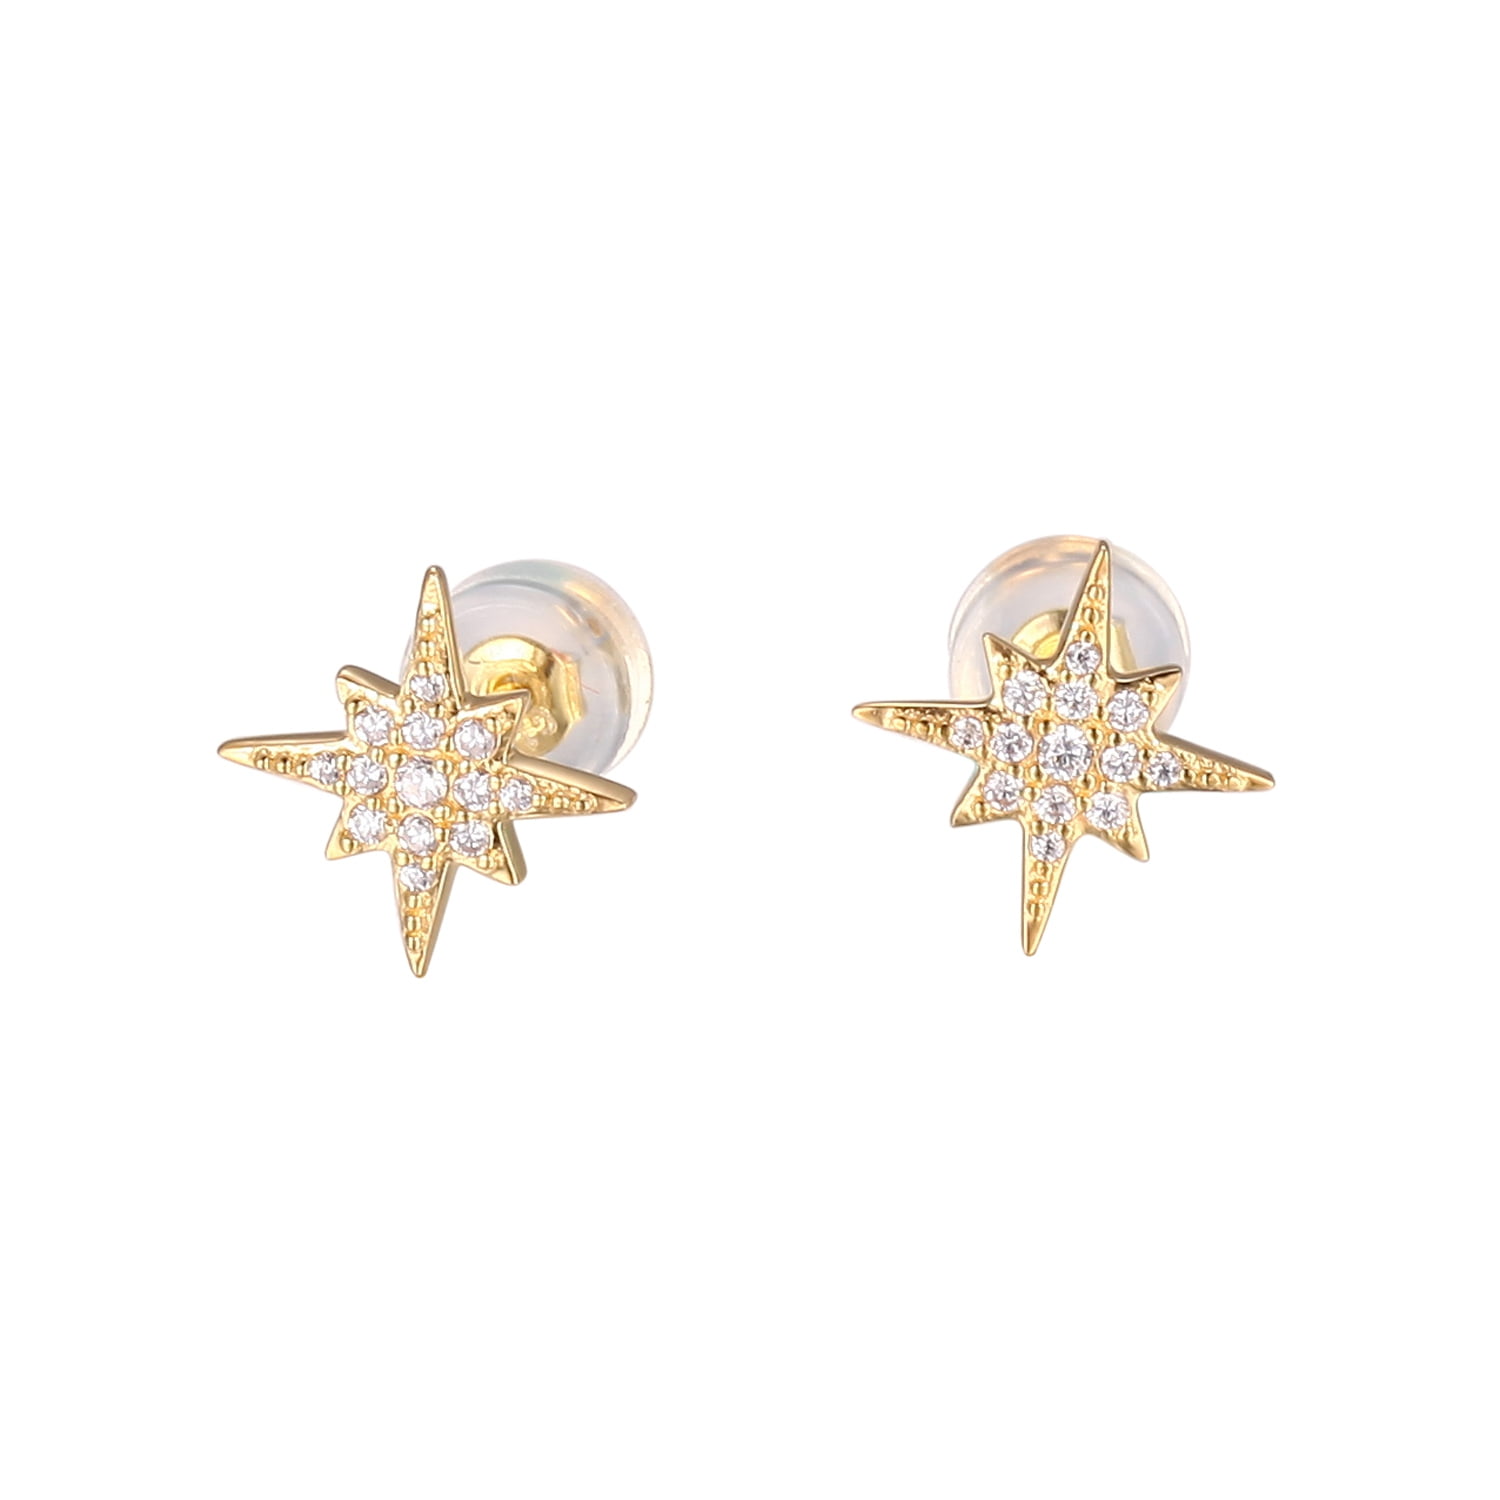 L-11 mm, W-11 mm 14k Yellow Gold Nautical Star Stud Earrings for Women 